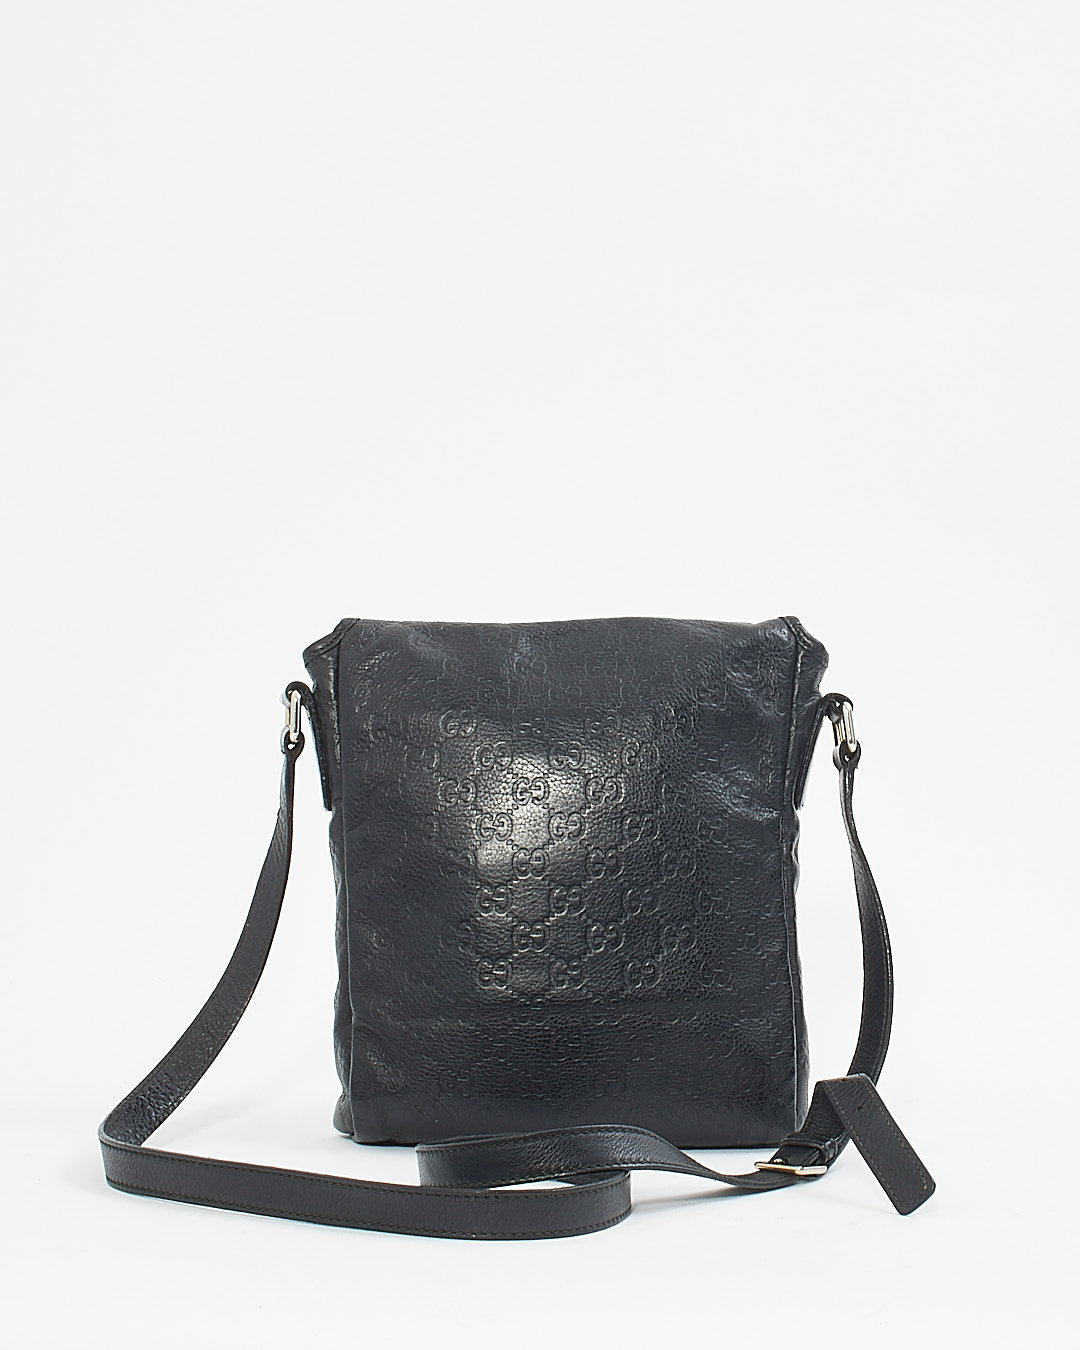 Gucci Black GG Leather Crossbody Bag